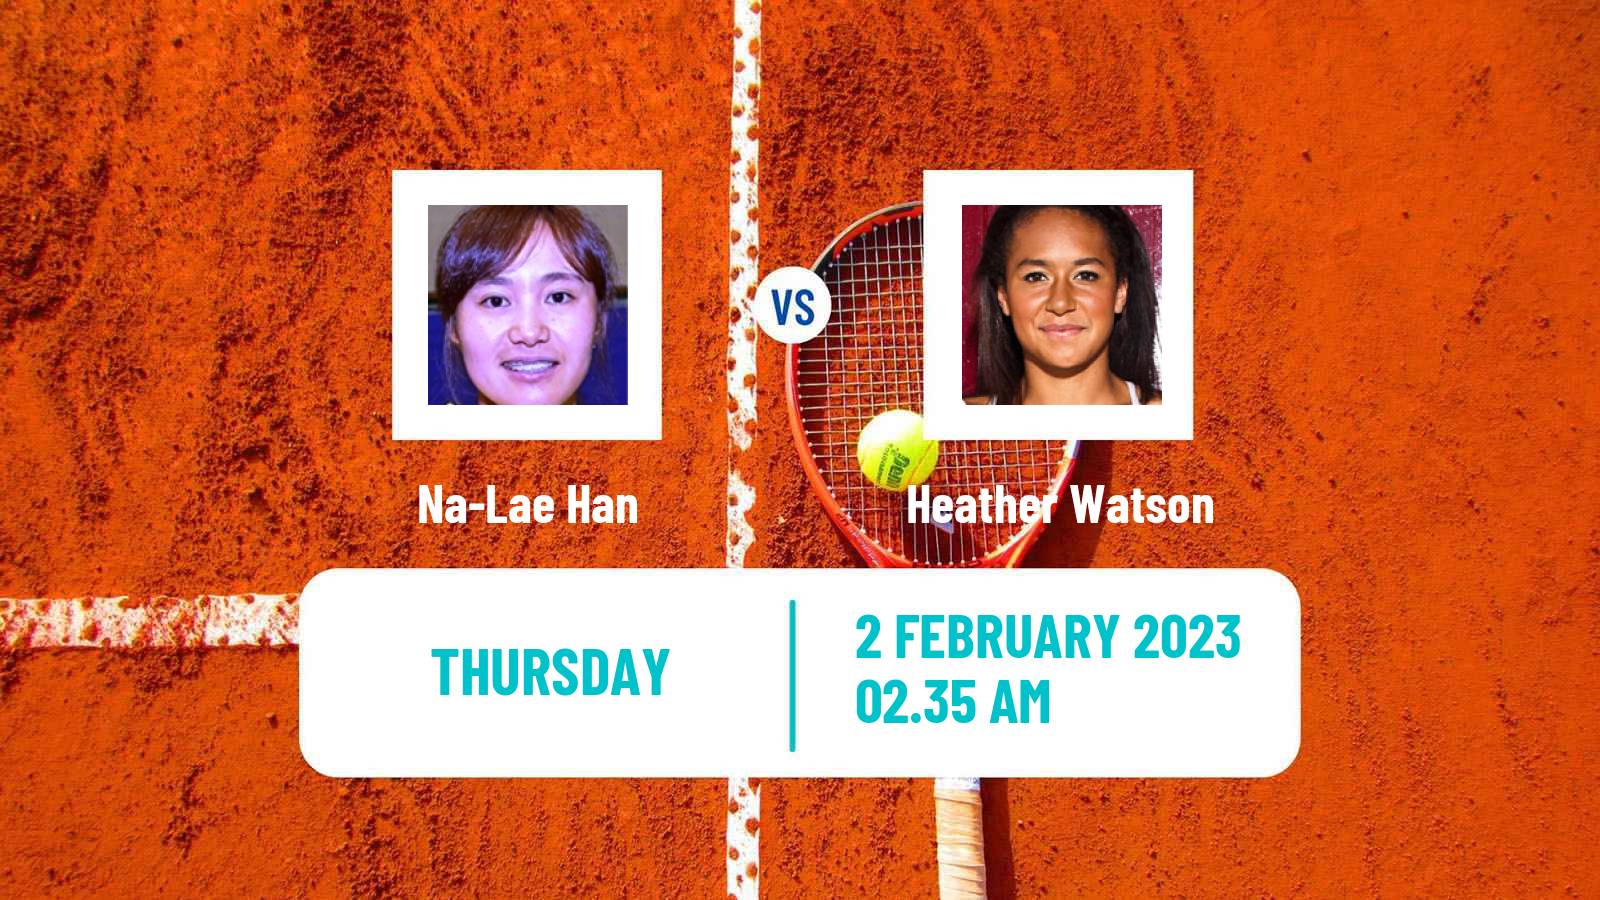 Tennis WTA Hua Hin Na-Lae Han - Heather Watson